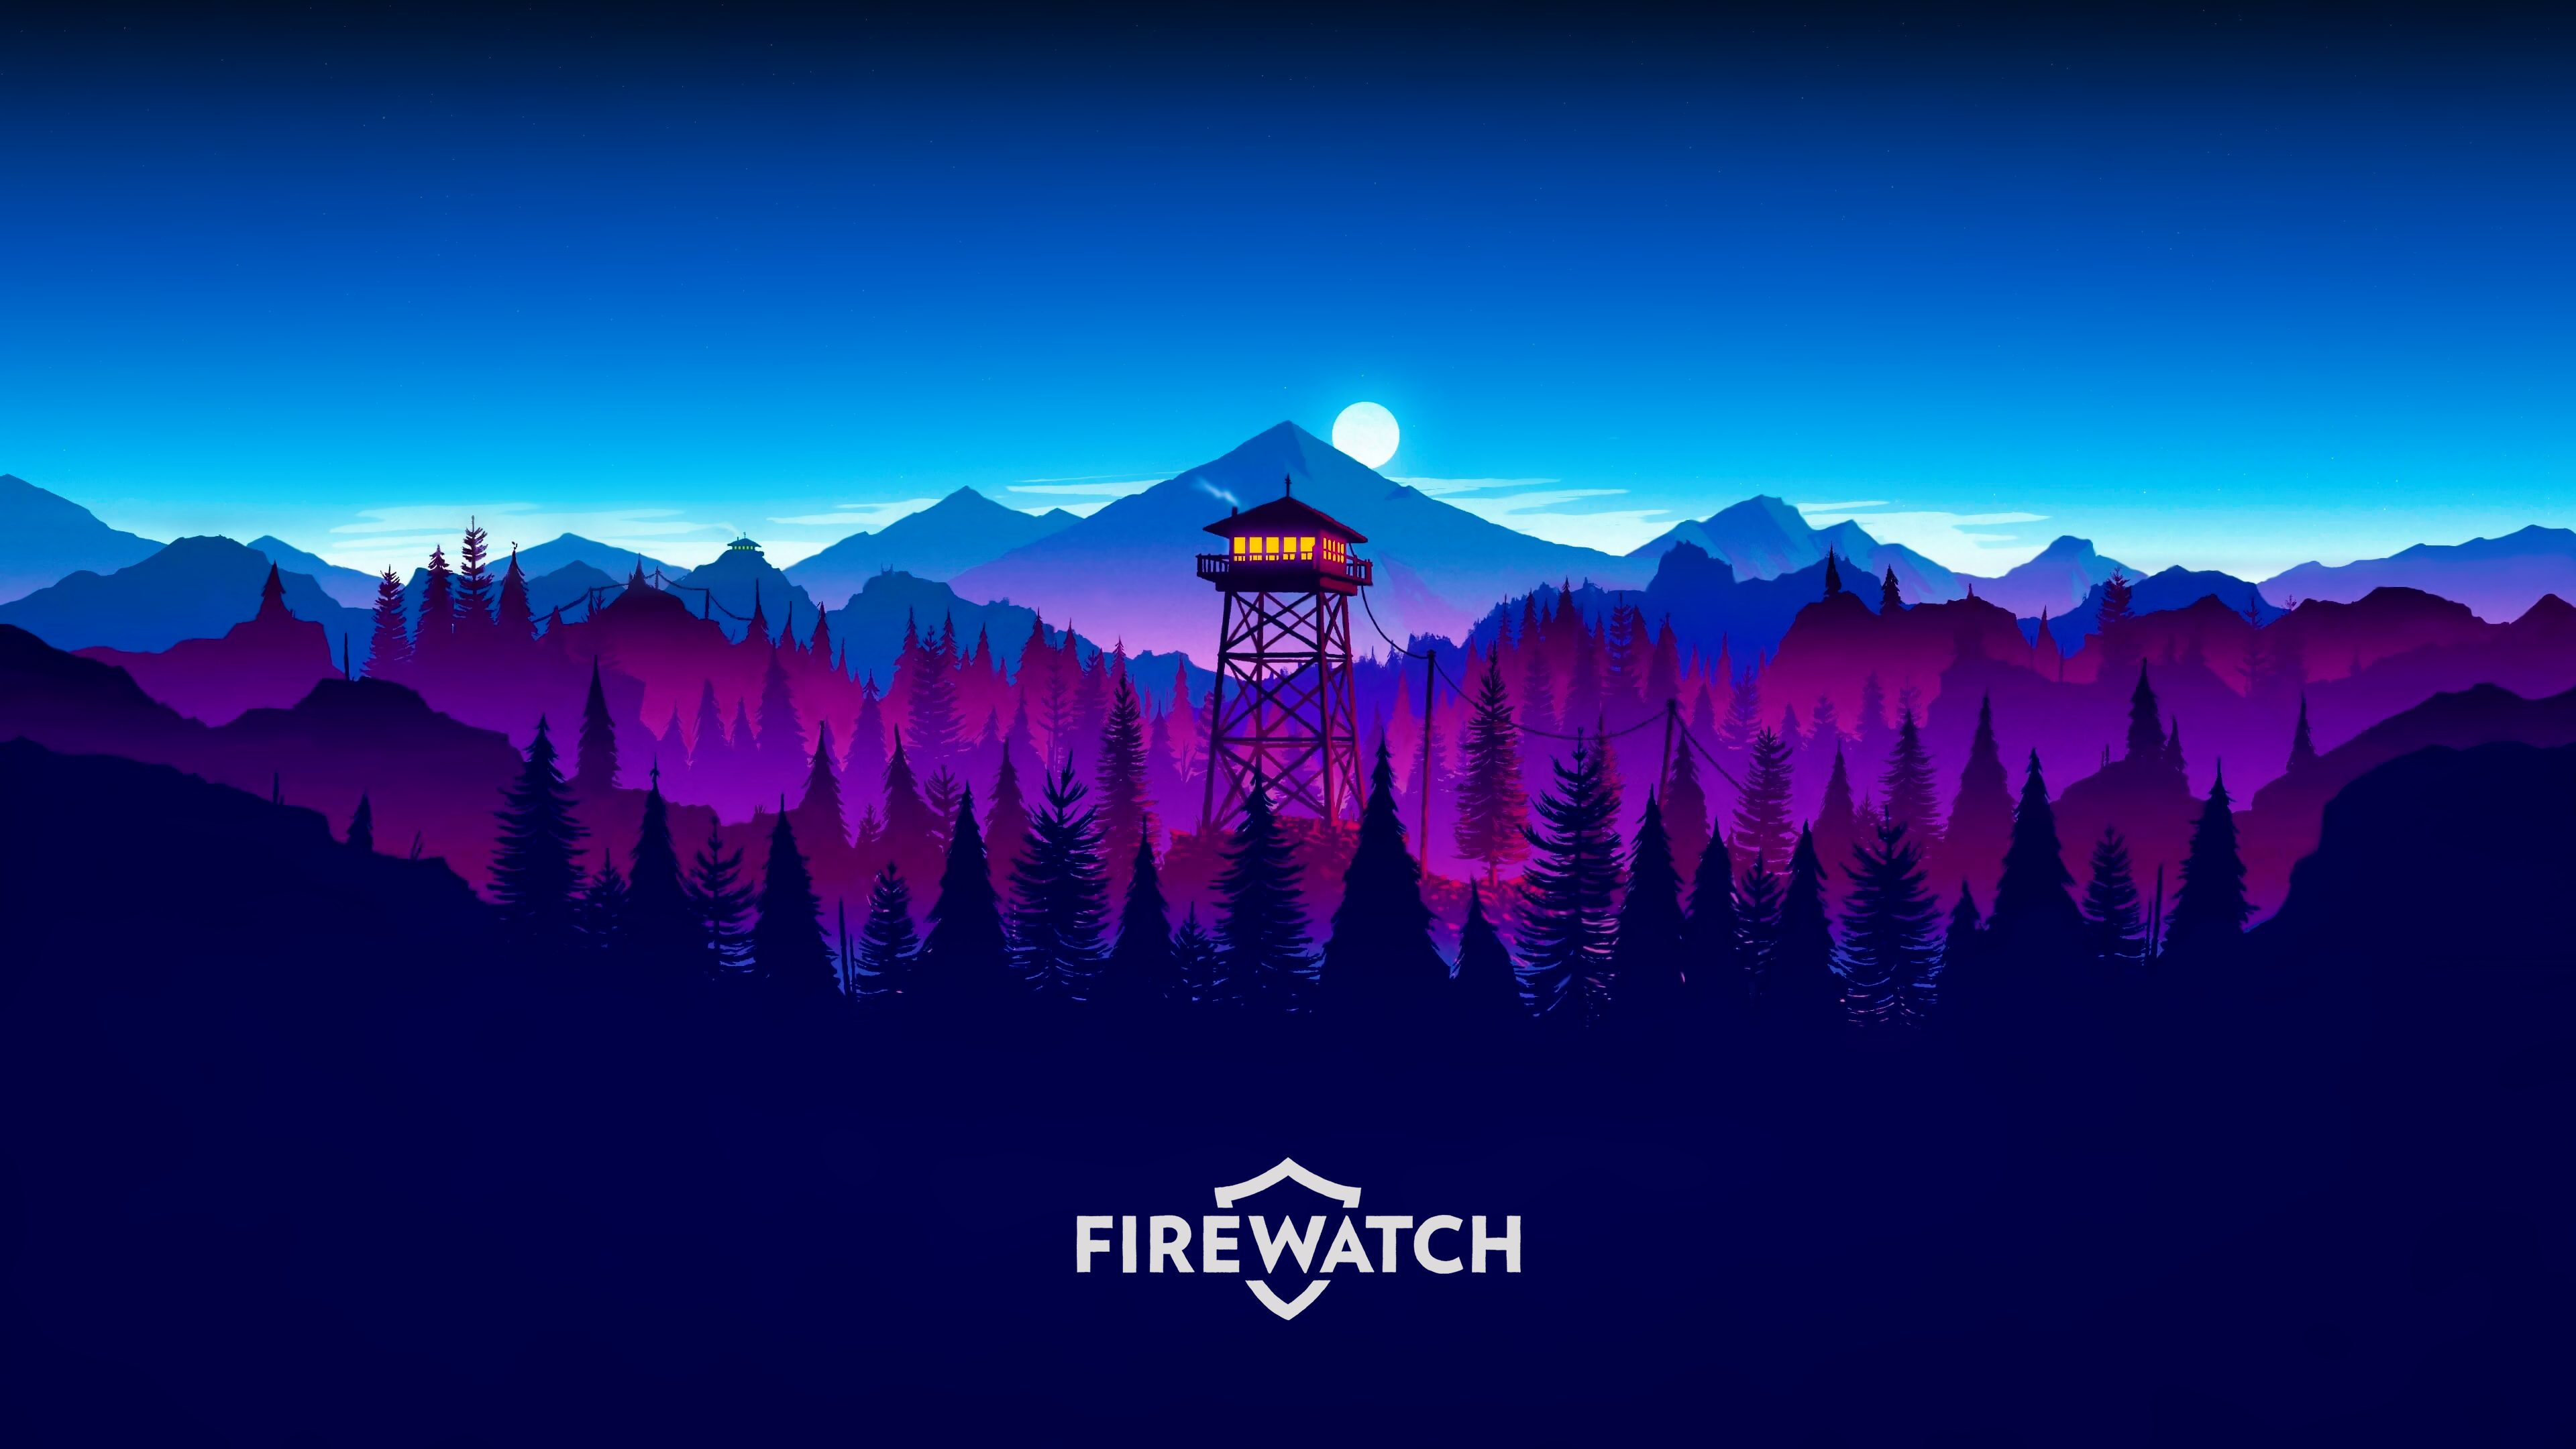 Firewatch Video Games Forest Nature Landscape Mountains Sunset Pine Trees Artwork Digital Art Illust 3840x2160